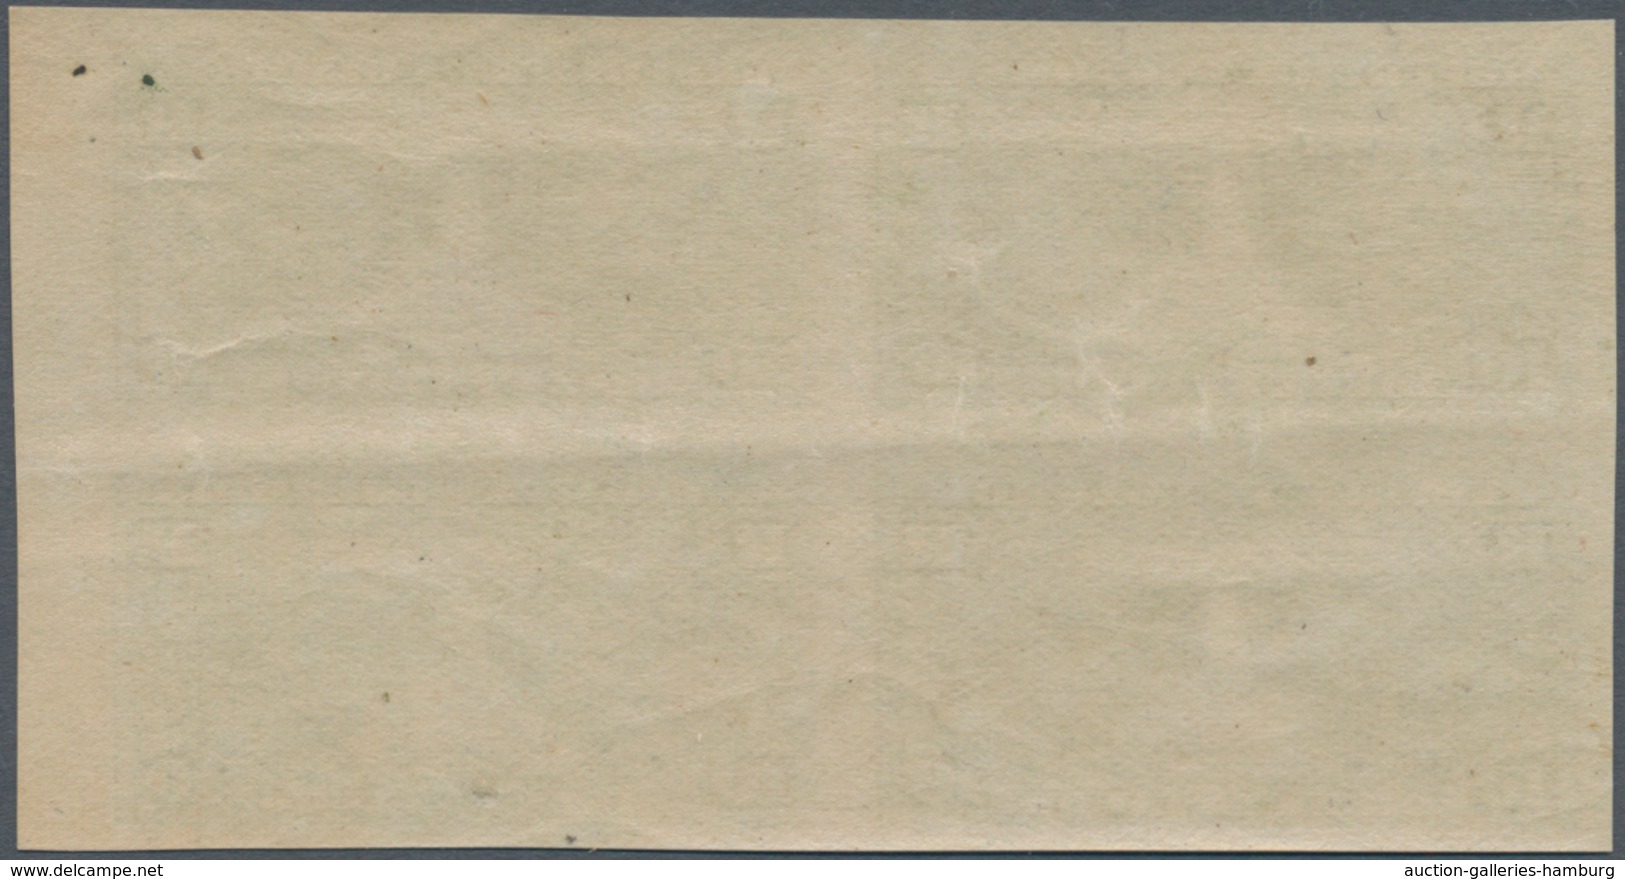 Kolumbien: 1917, 10 C. Registration Stamps In Unperforated Block Of Four. Very Fine Mnh. - Kolumbien